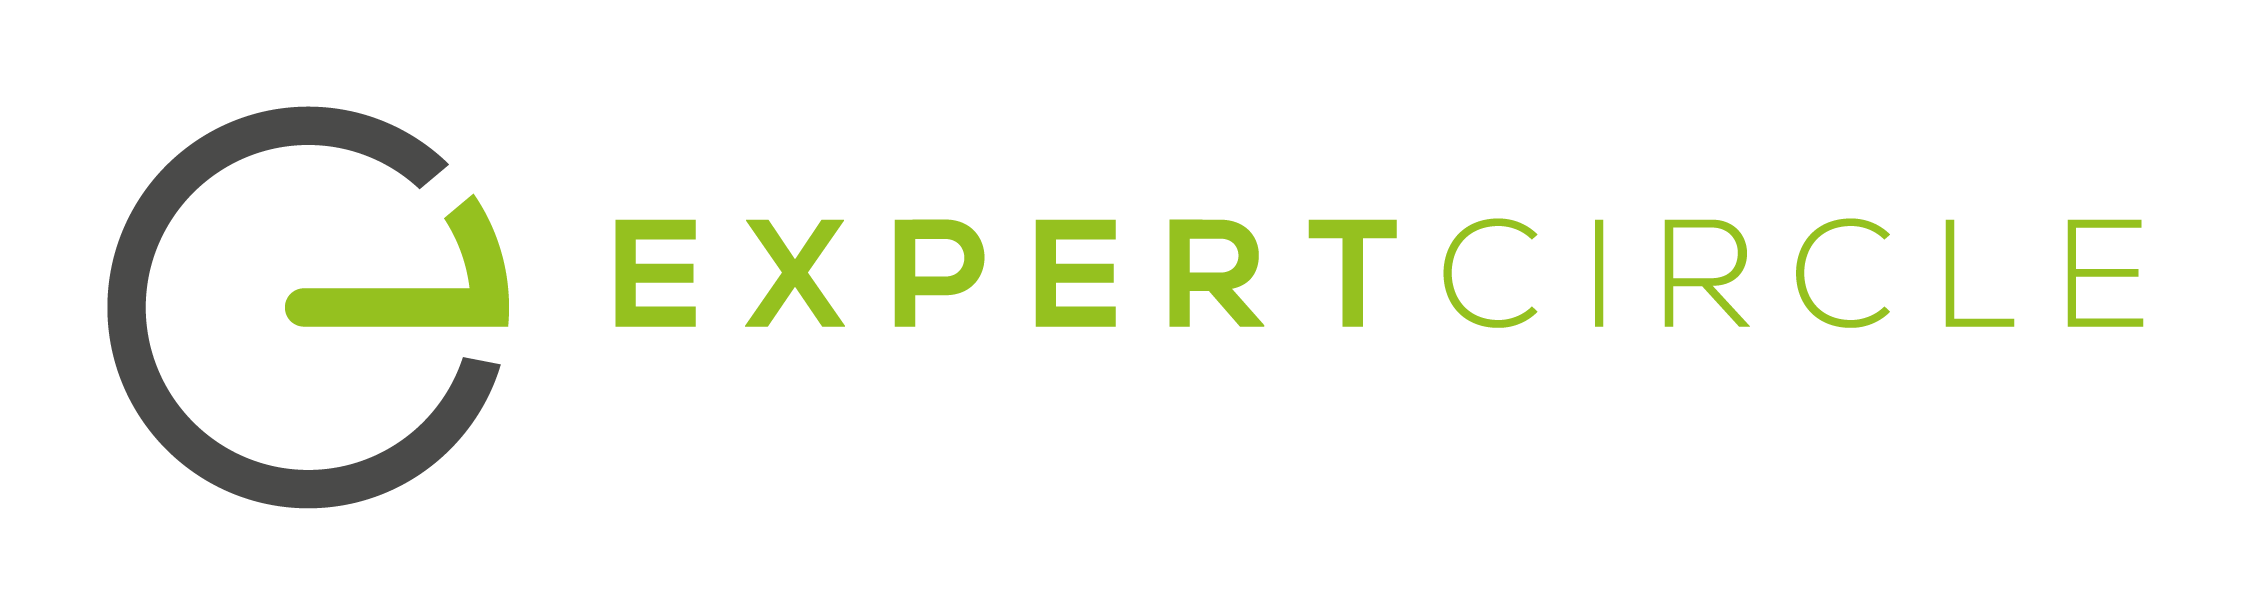 ExpertCircle Logo  COL WEB